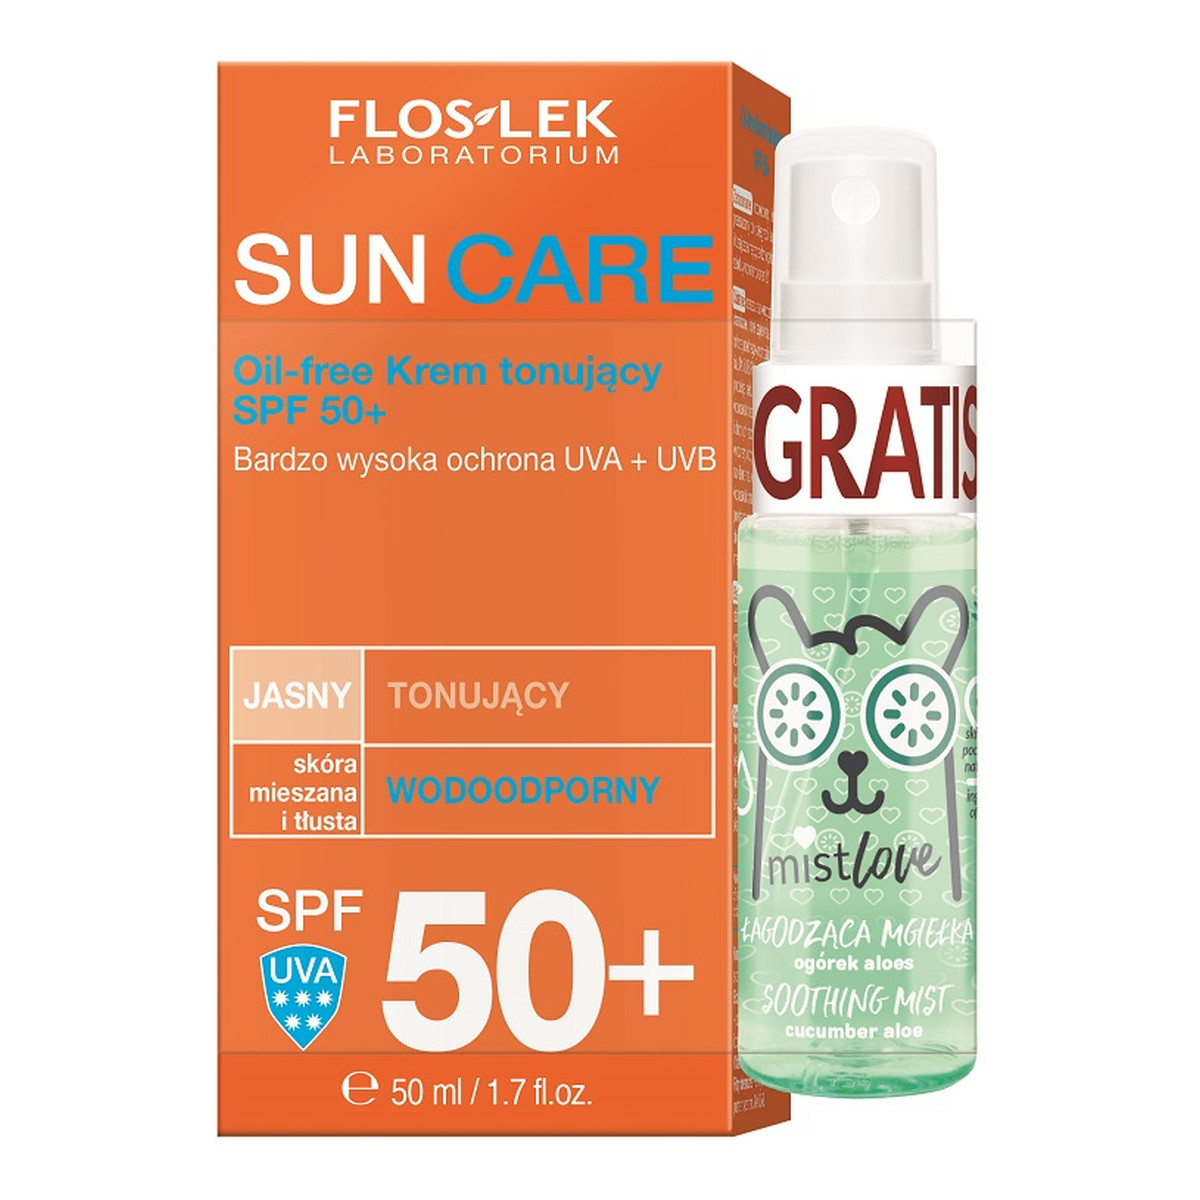 FlosLek Sun Care Oil-free Krem tonujący SPF 50 skóra mieszana i tłusta 50ml + MISTLOVE łagodząca mgiełka ogórek aloes 50ml